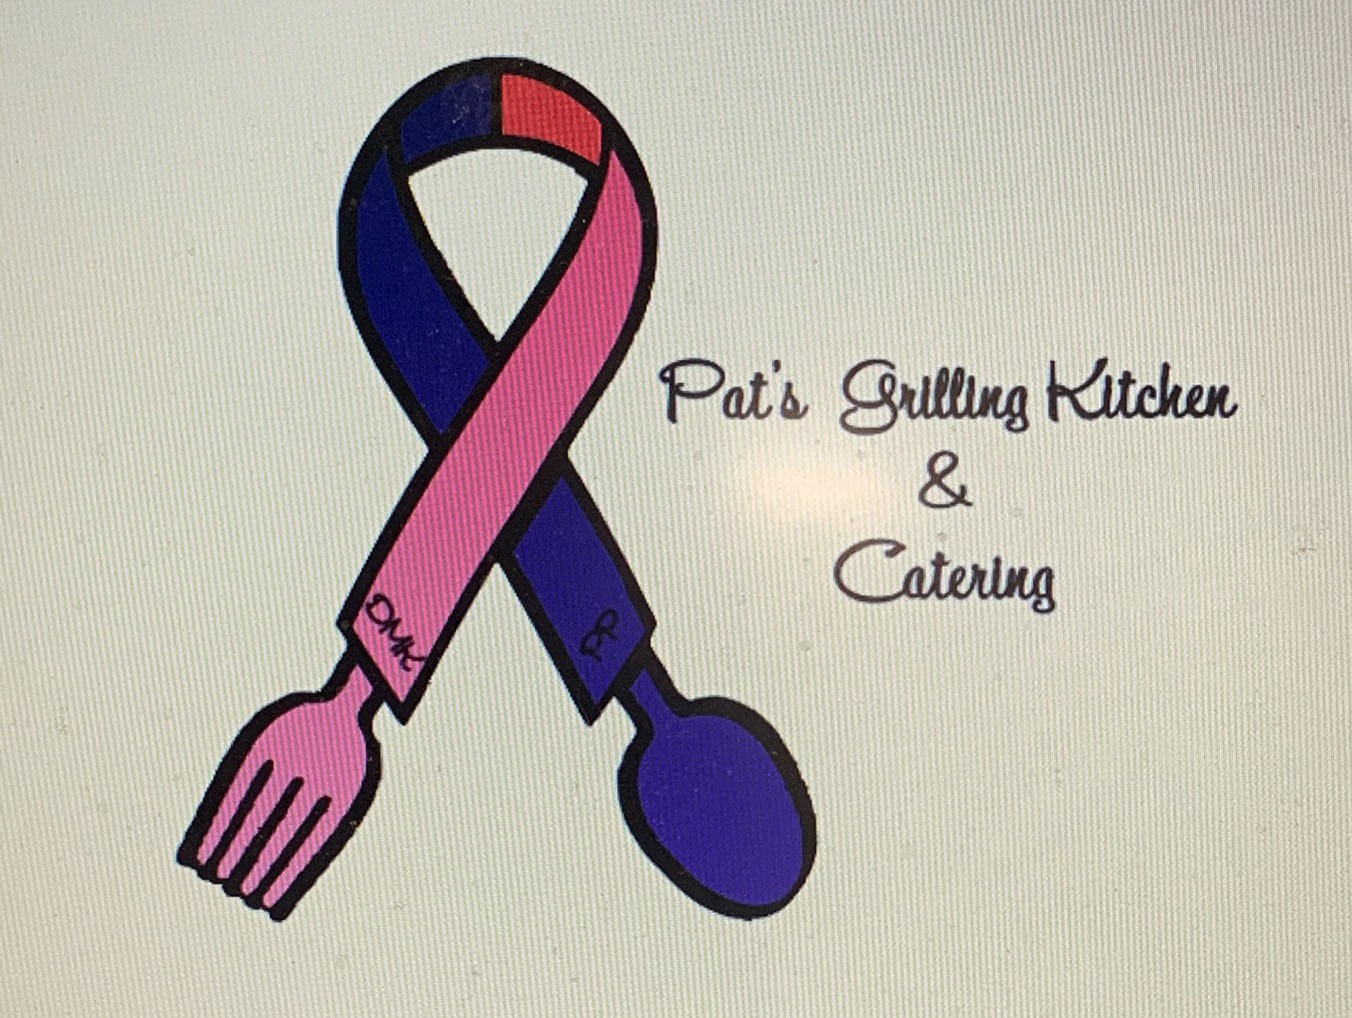 Pat's Grilling Kitchen